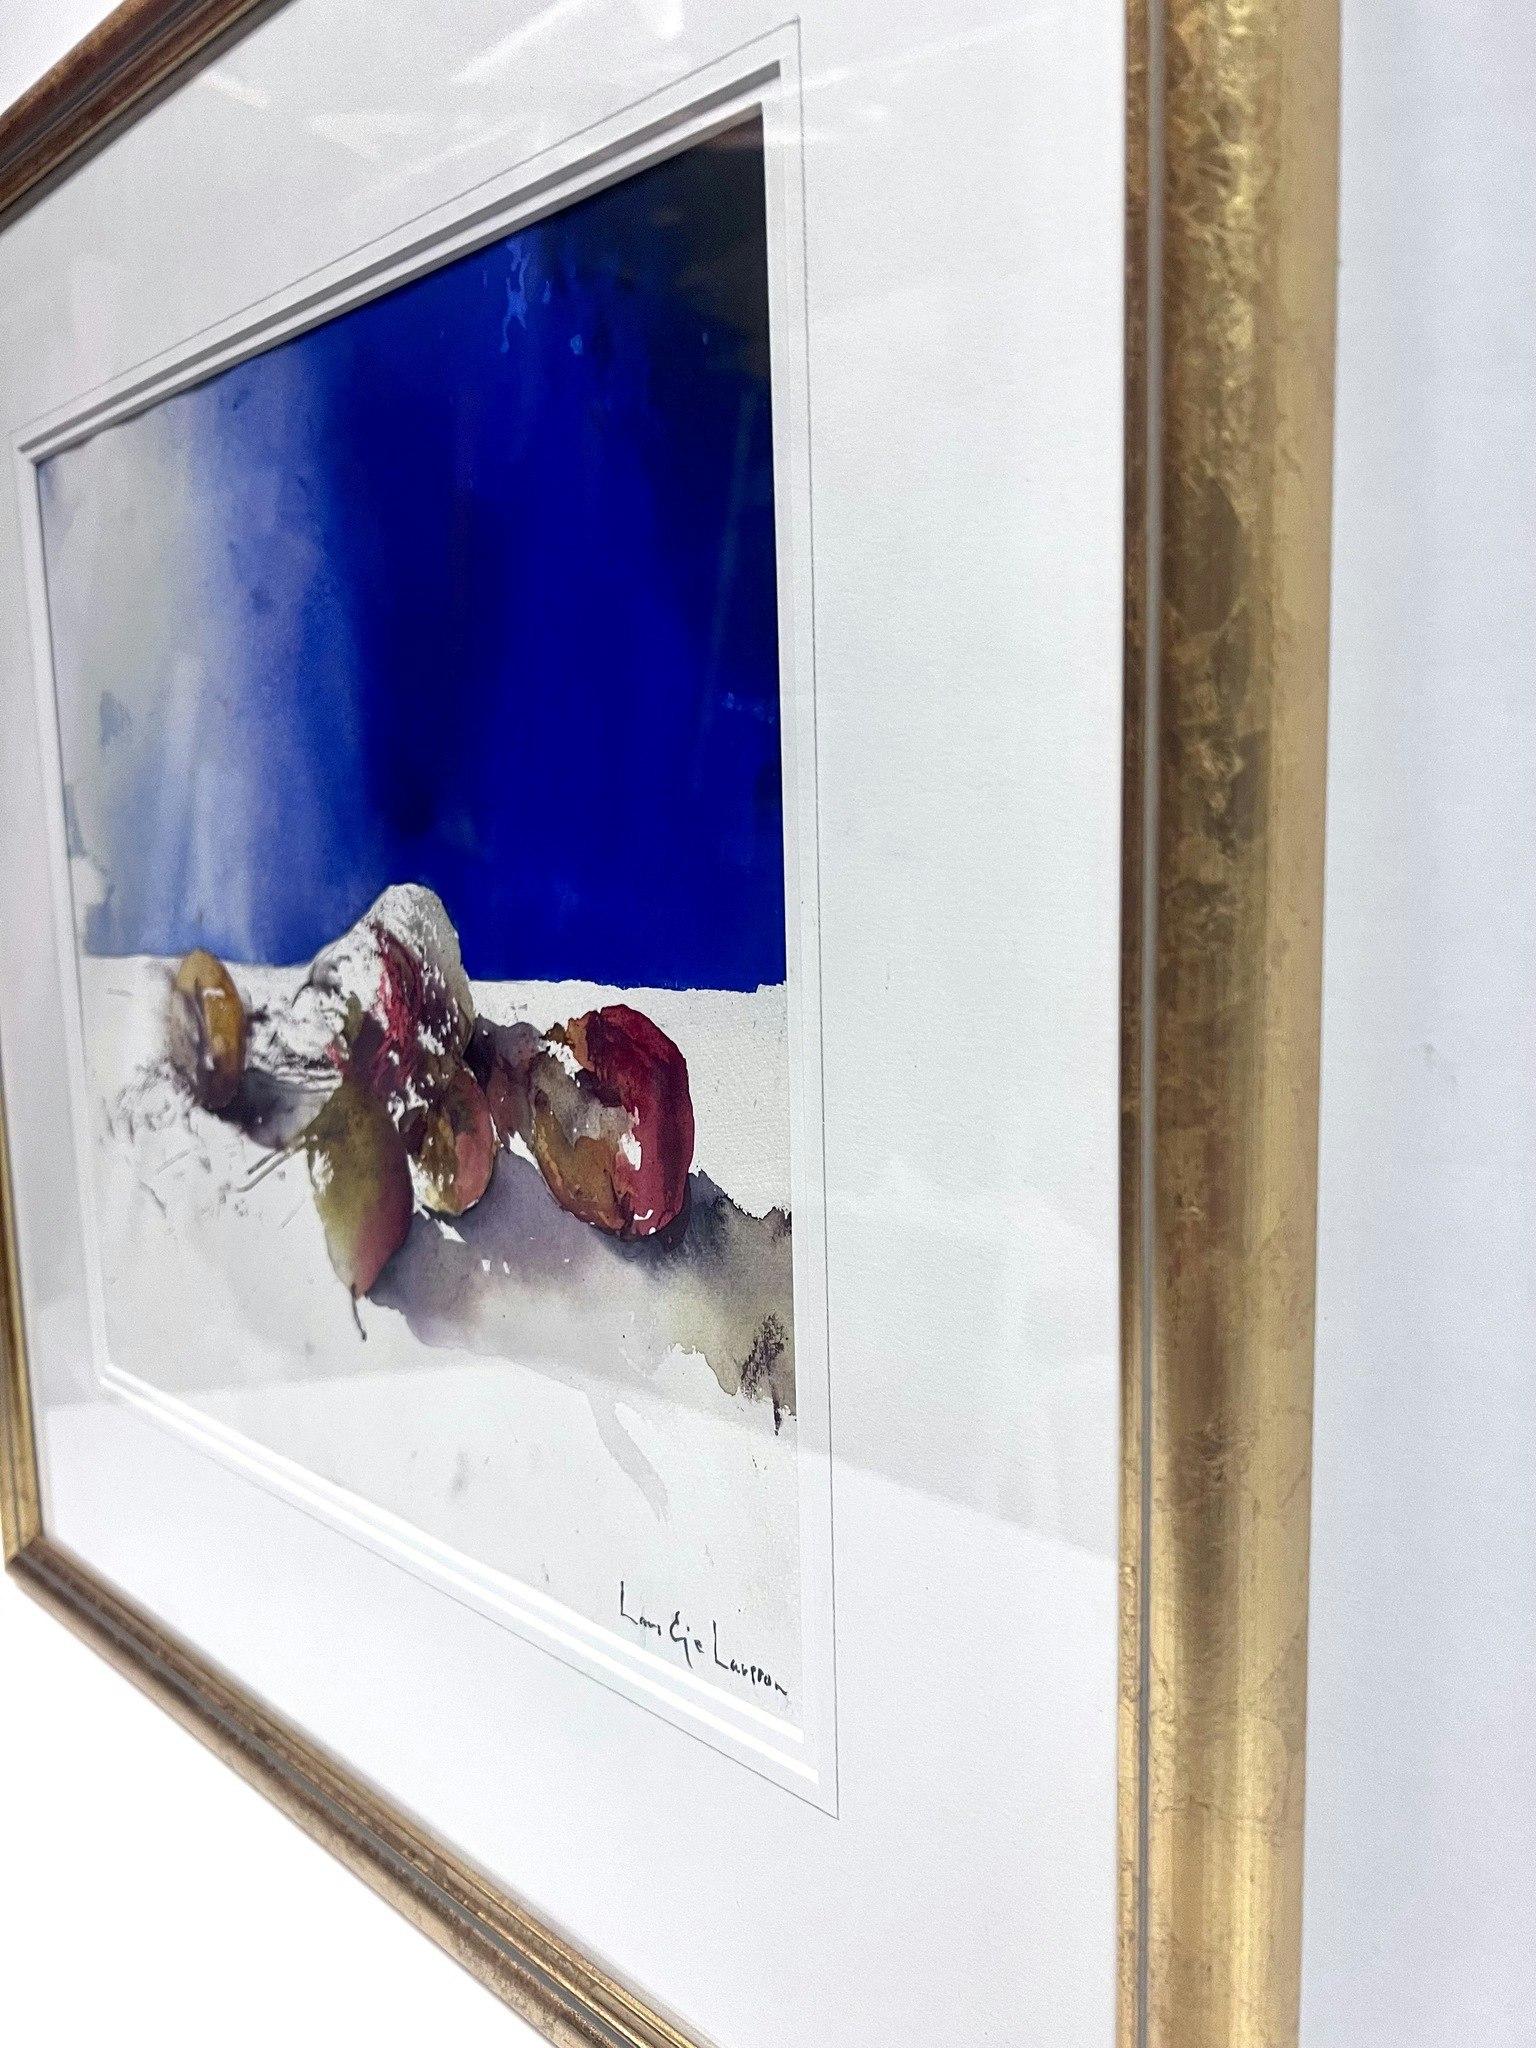 "Päron" Akvarell av Lars "Eje" Larsson 51x50cm